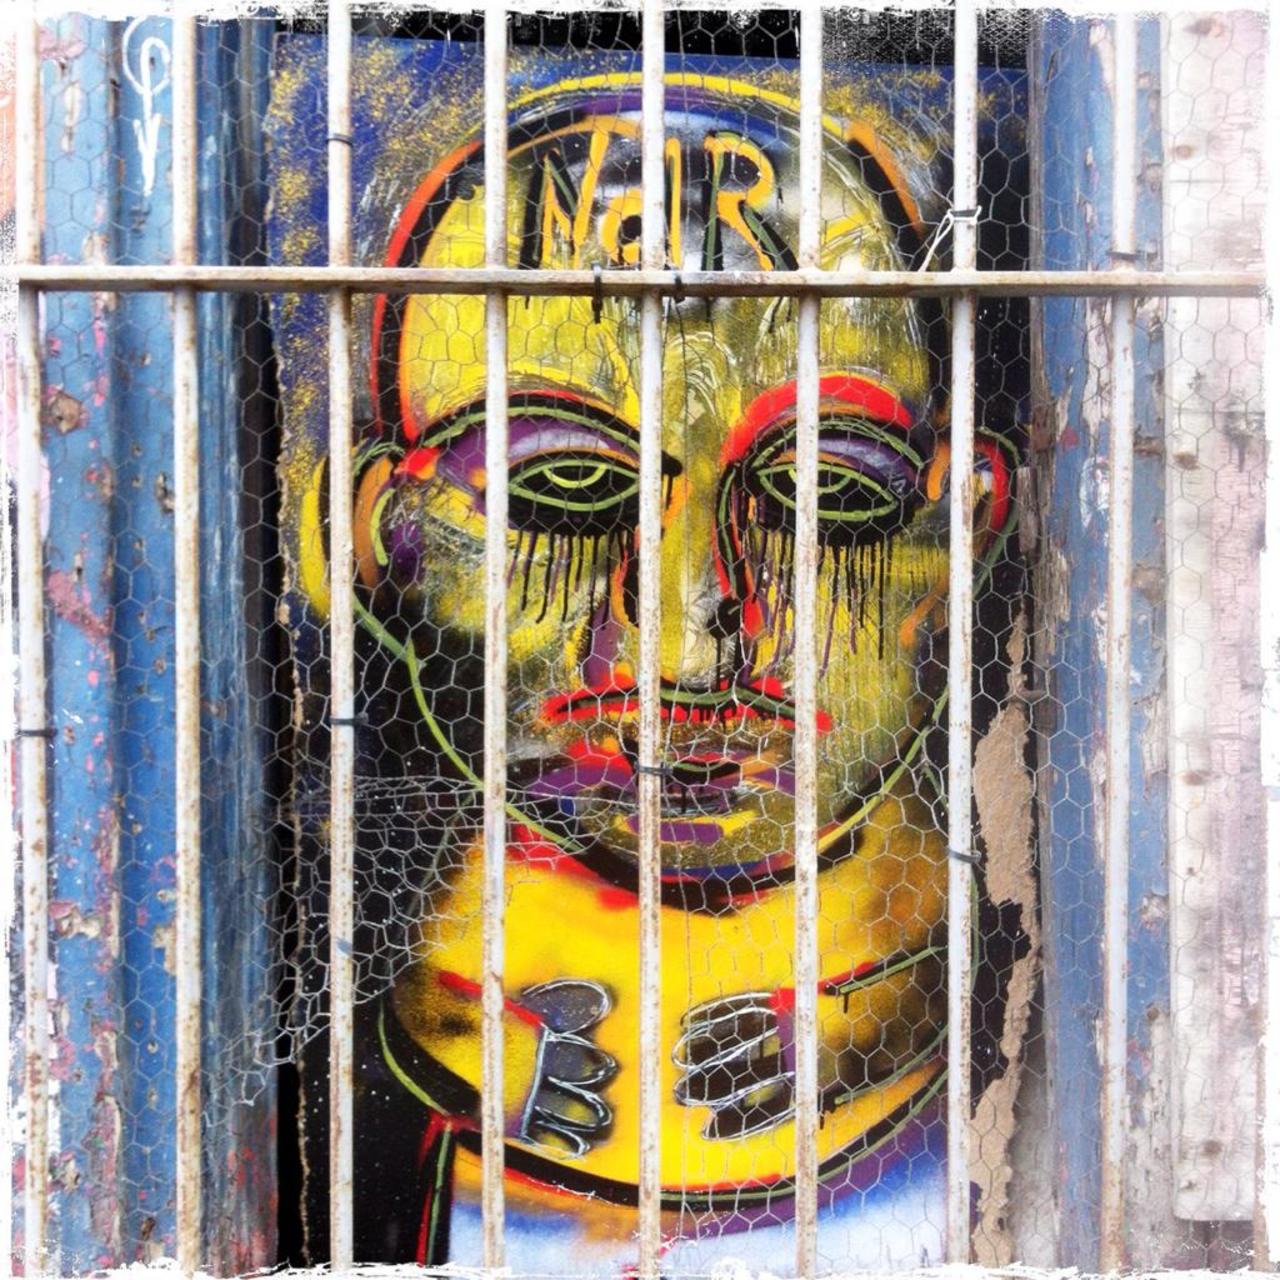 NOIR behind bars

#streetart on Sclater Street #art #graffiti @SclaterStStall http://t.co/8J2eeSsSwg